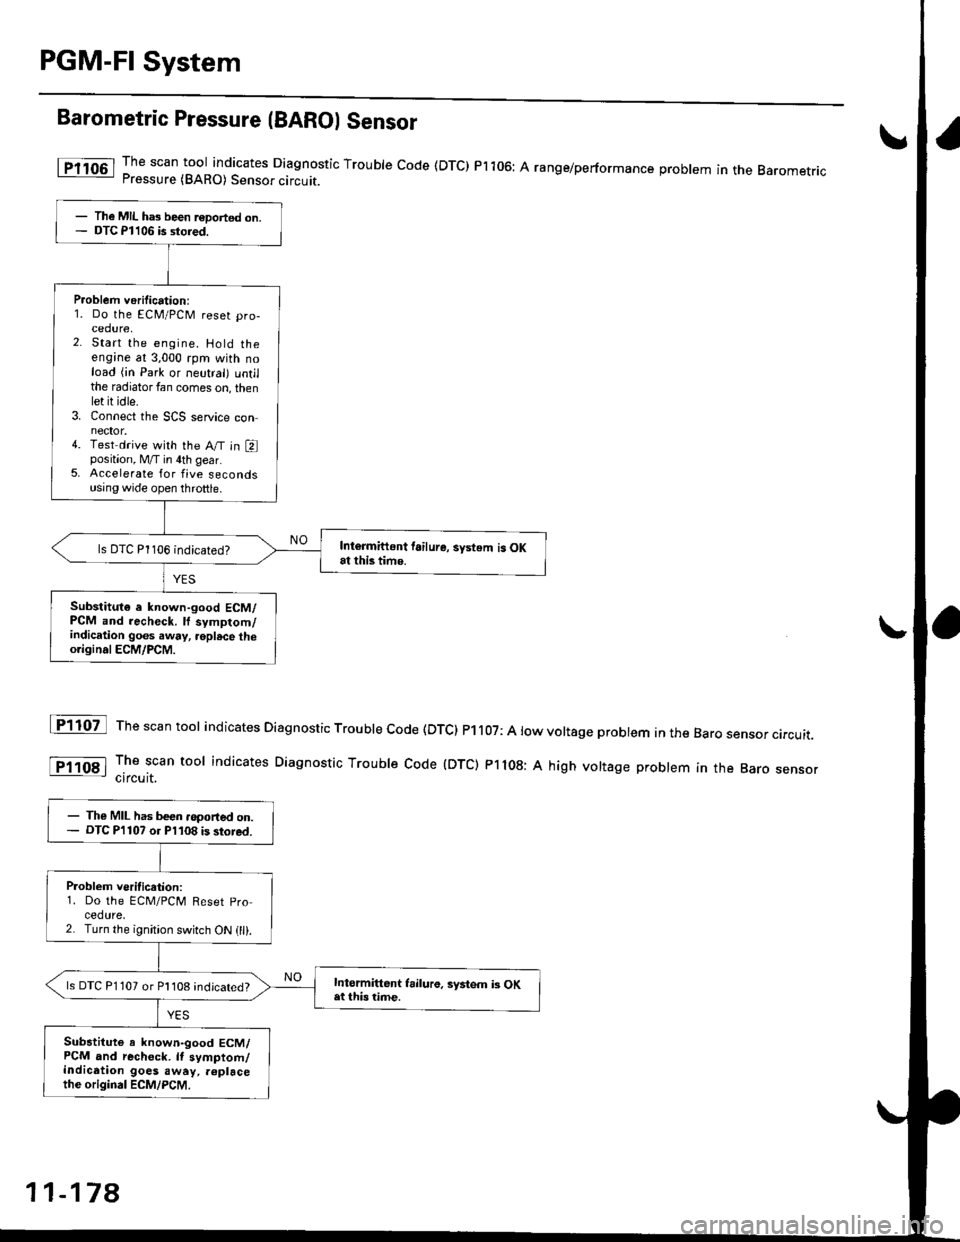 HONDA CIVIC 1996 6.G Workshop Manual PGM-FI System
Barometric Pressure (BAROI Sensor
The scan tool indicates Diagnostic Trouble code (DTC) Pi106: A range/performance problem in the BaromerrrcPressure (BARO) Sensor circuit.
The scan tool 